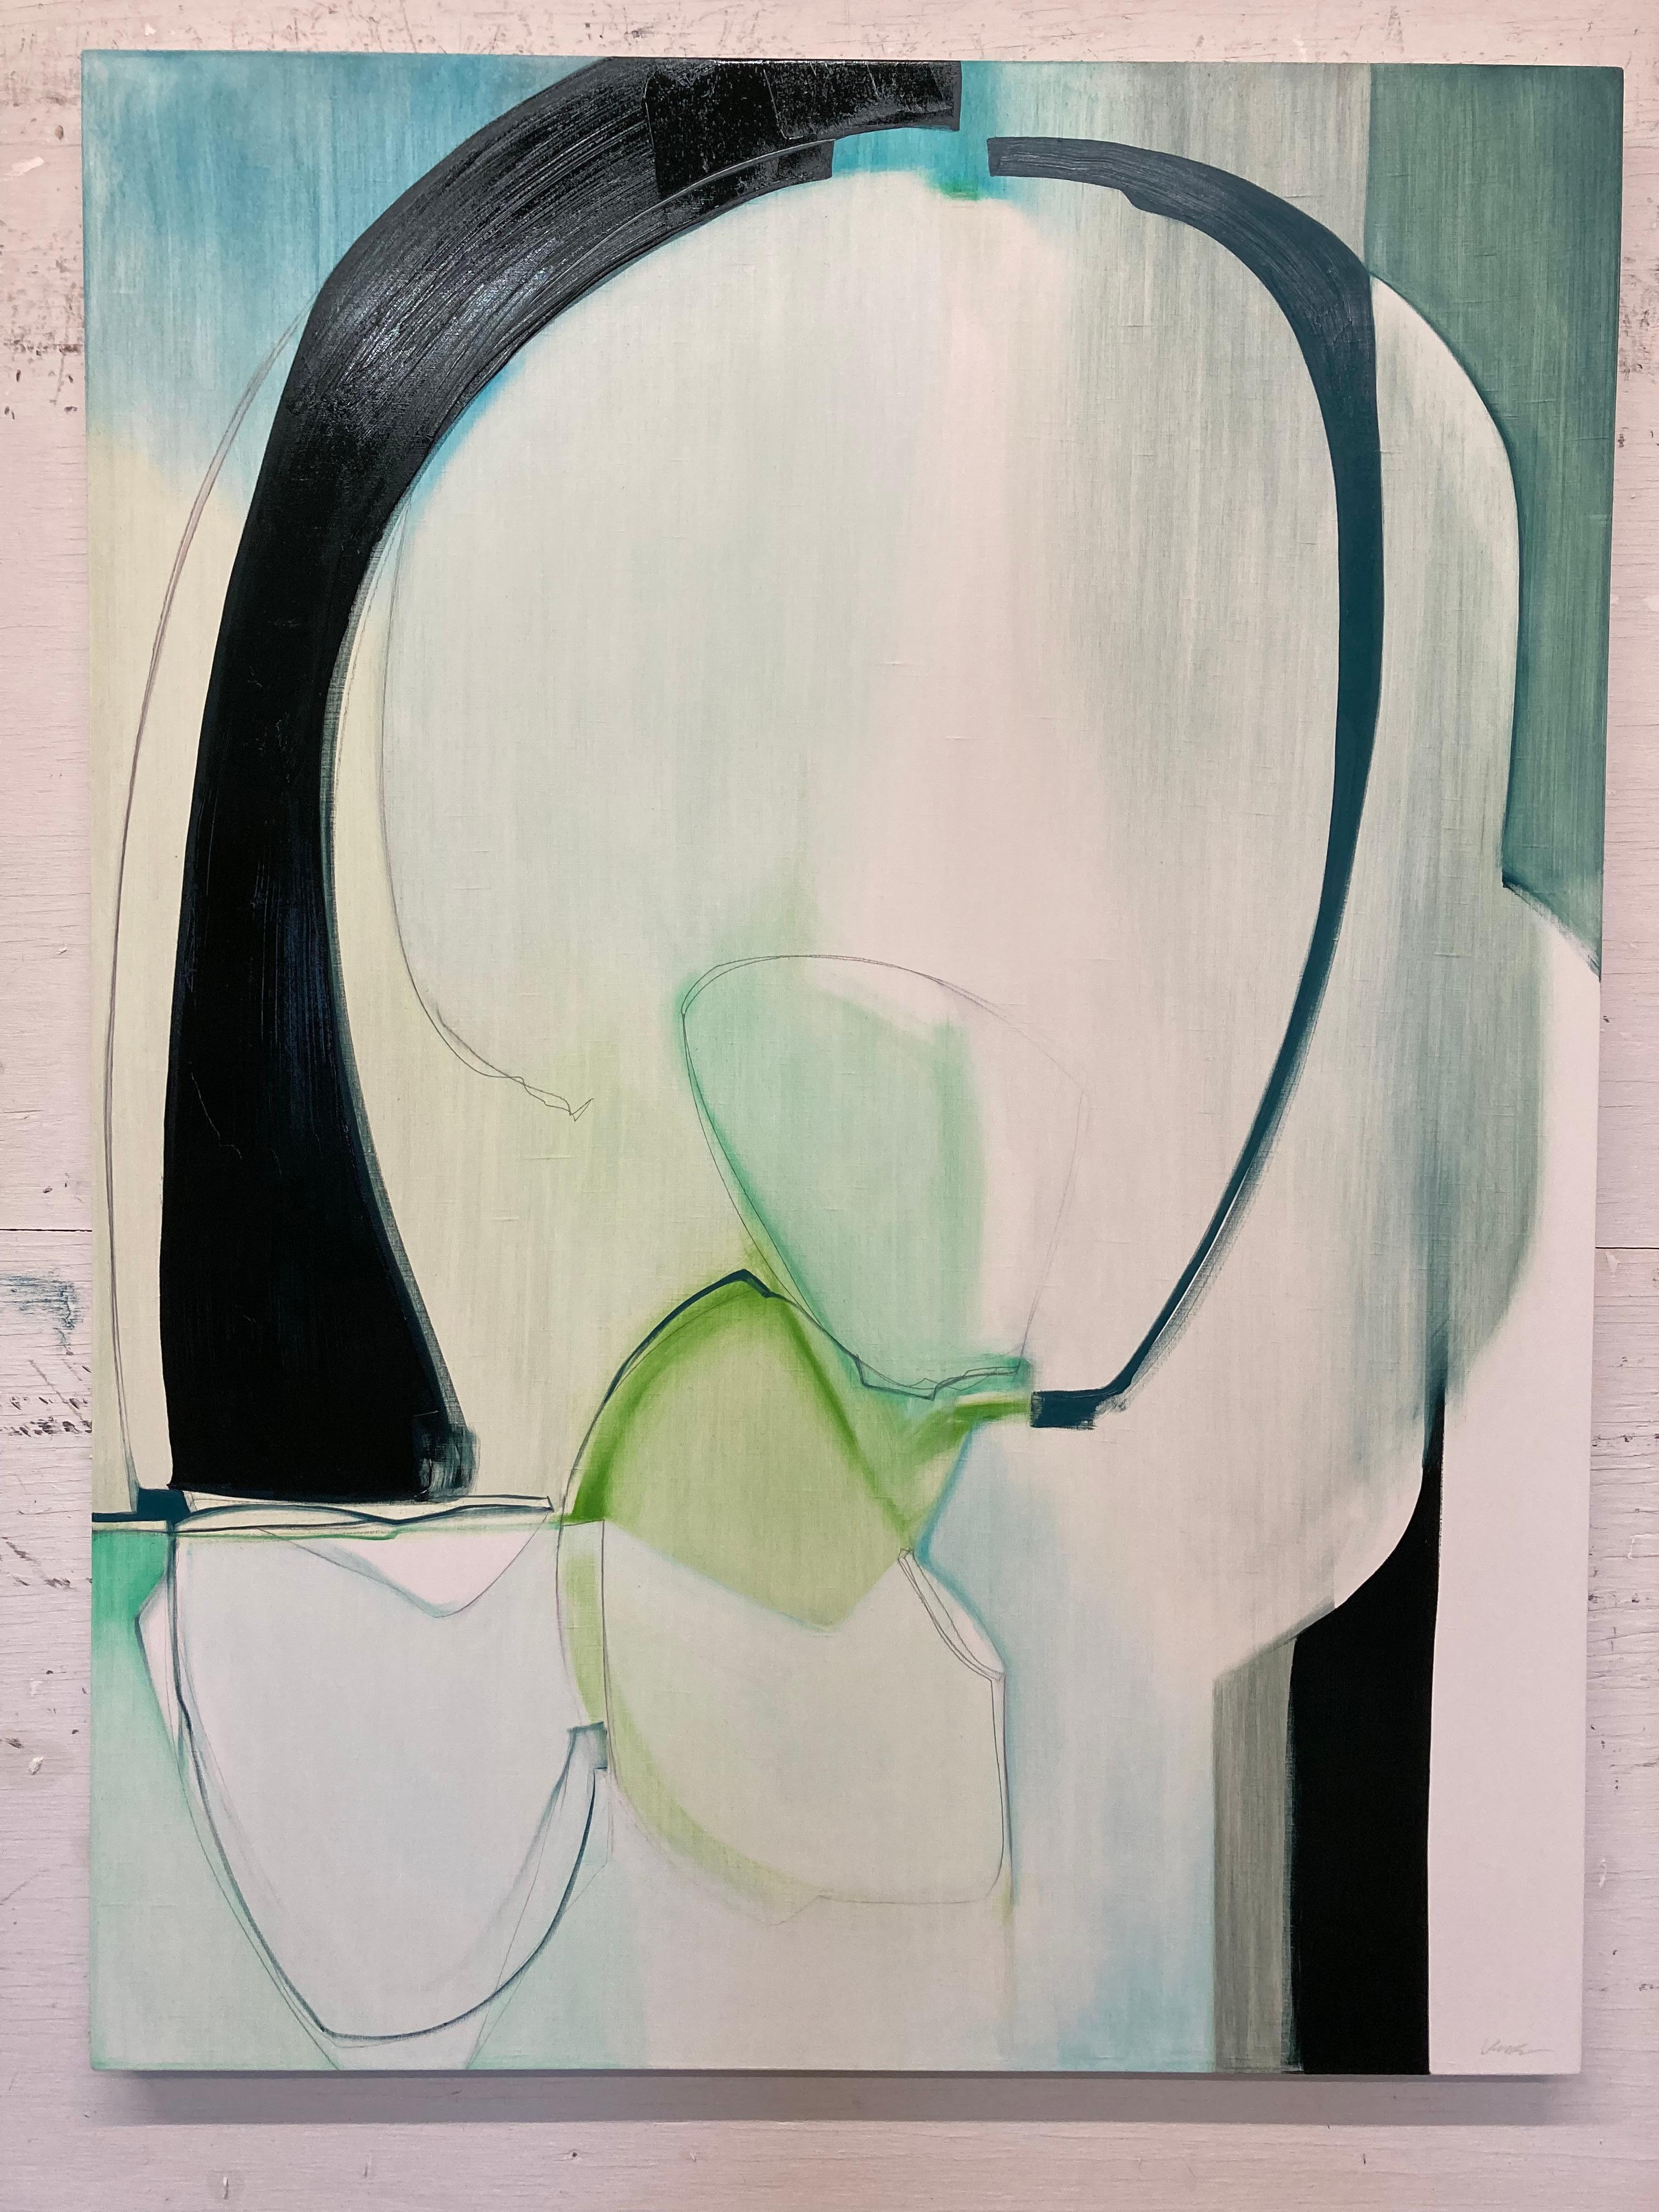 Completing,  Abstract, Oil, Graphite, Wood Panel, Blue, Black, Green (Abstrakt), Painting, von Rose Umerlik